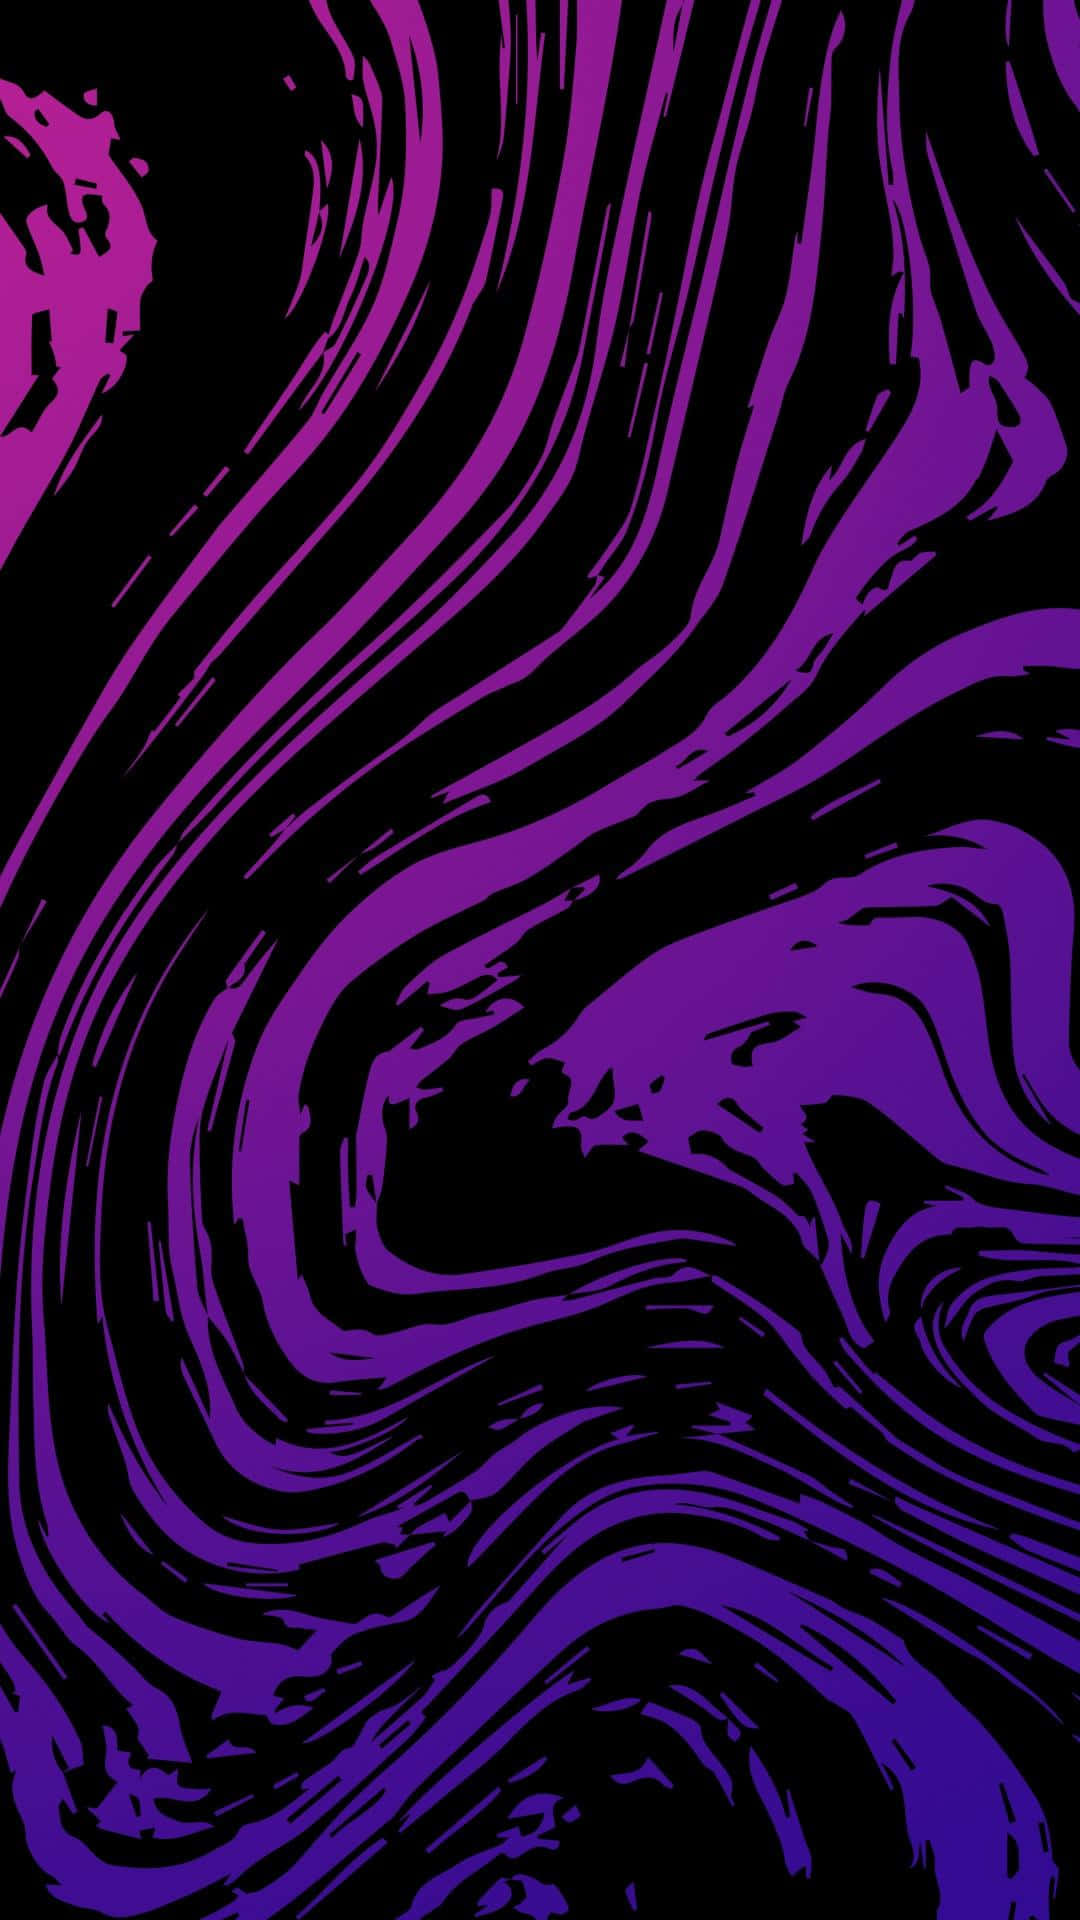 Purple And Black Swirls On A Black Background